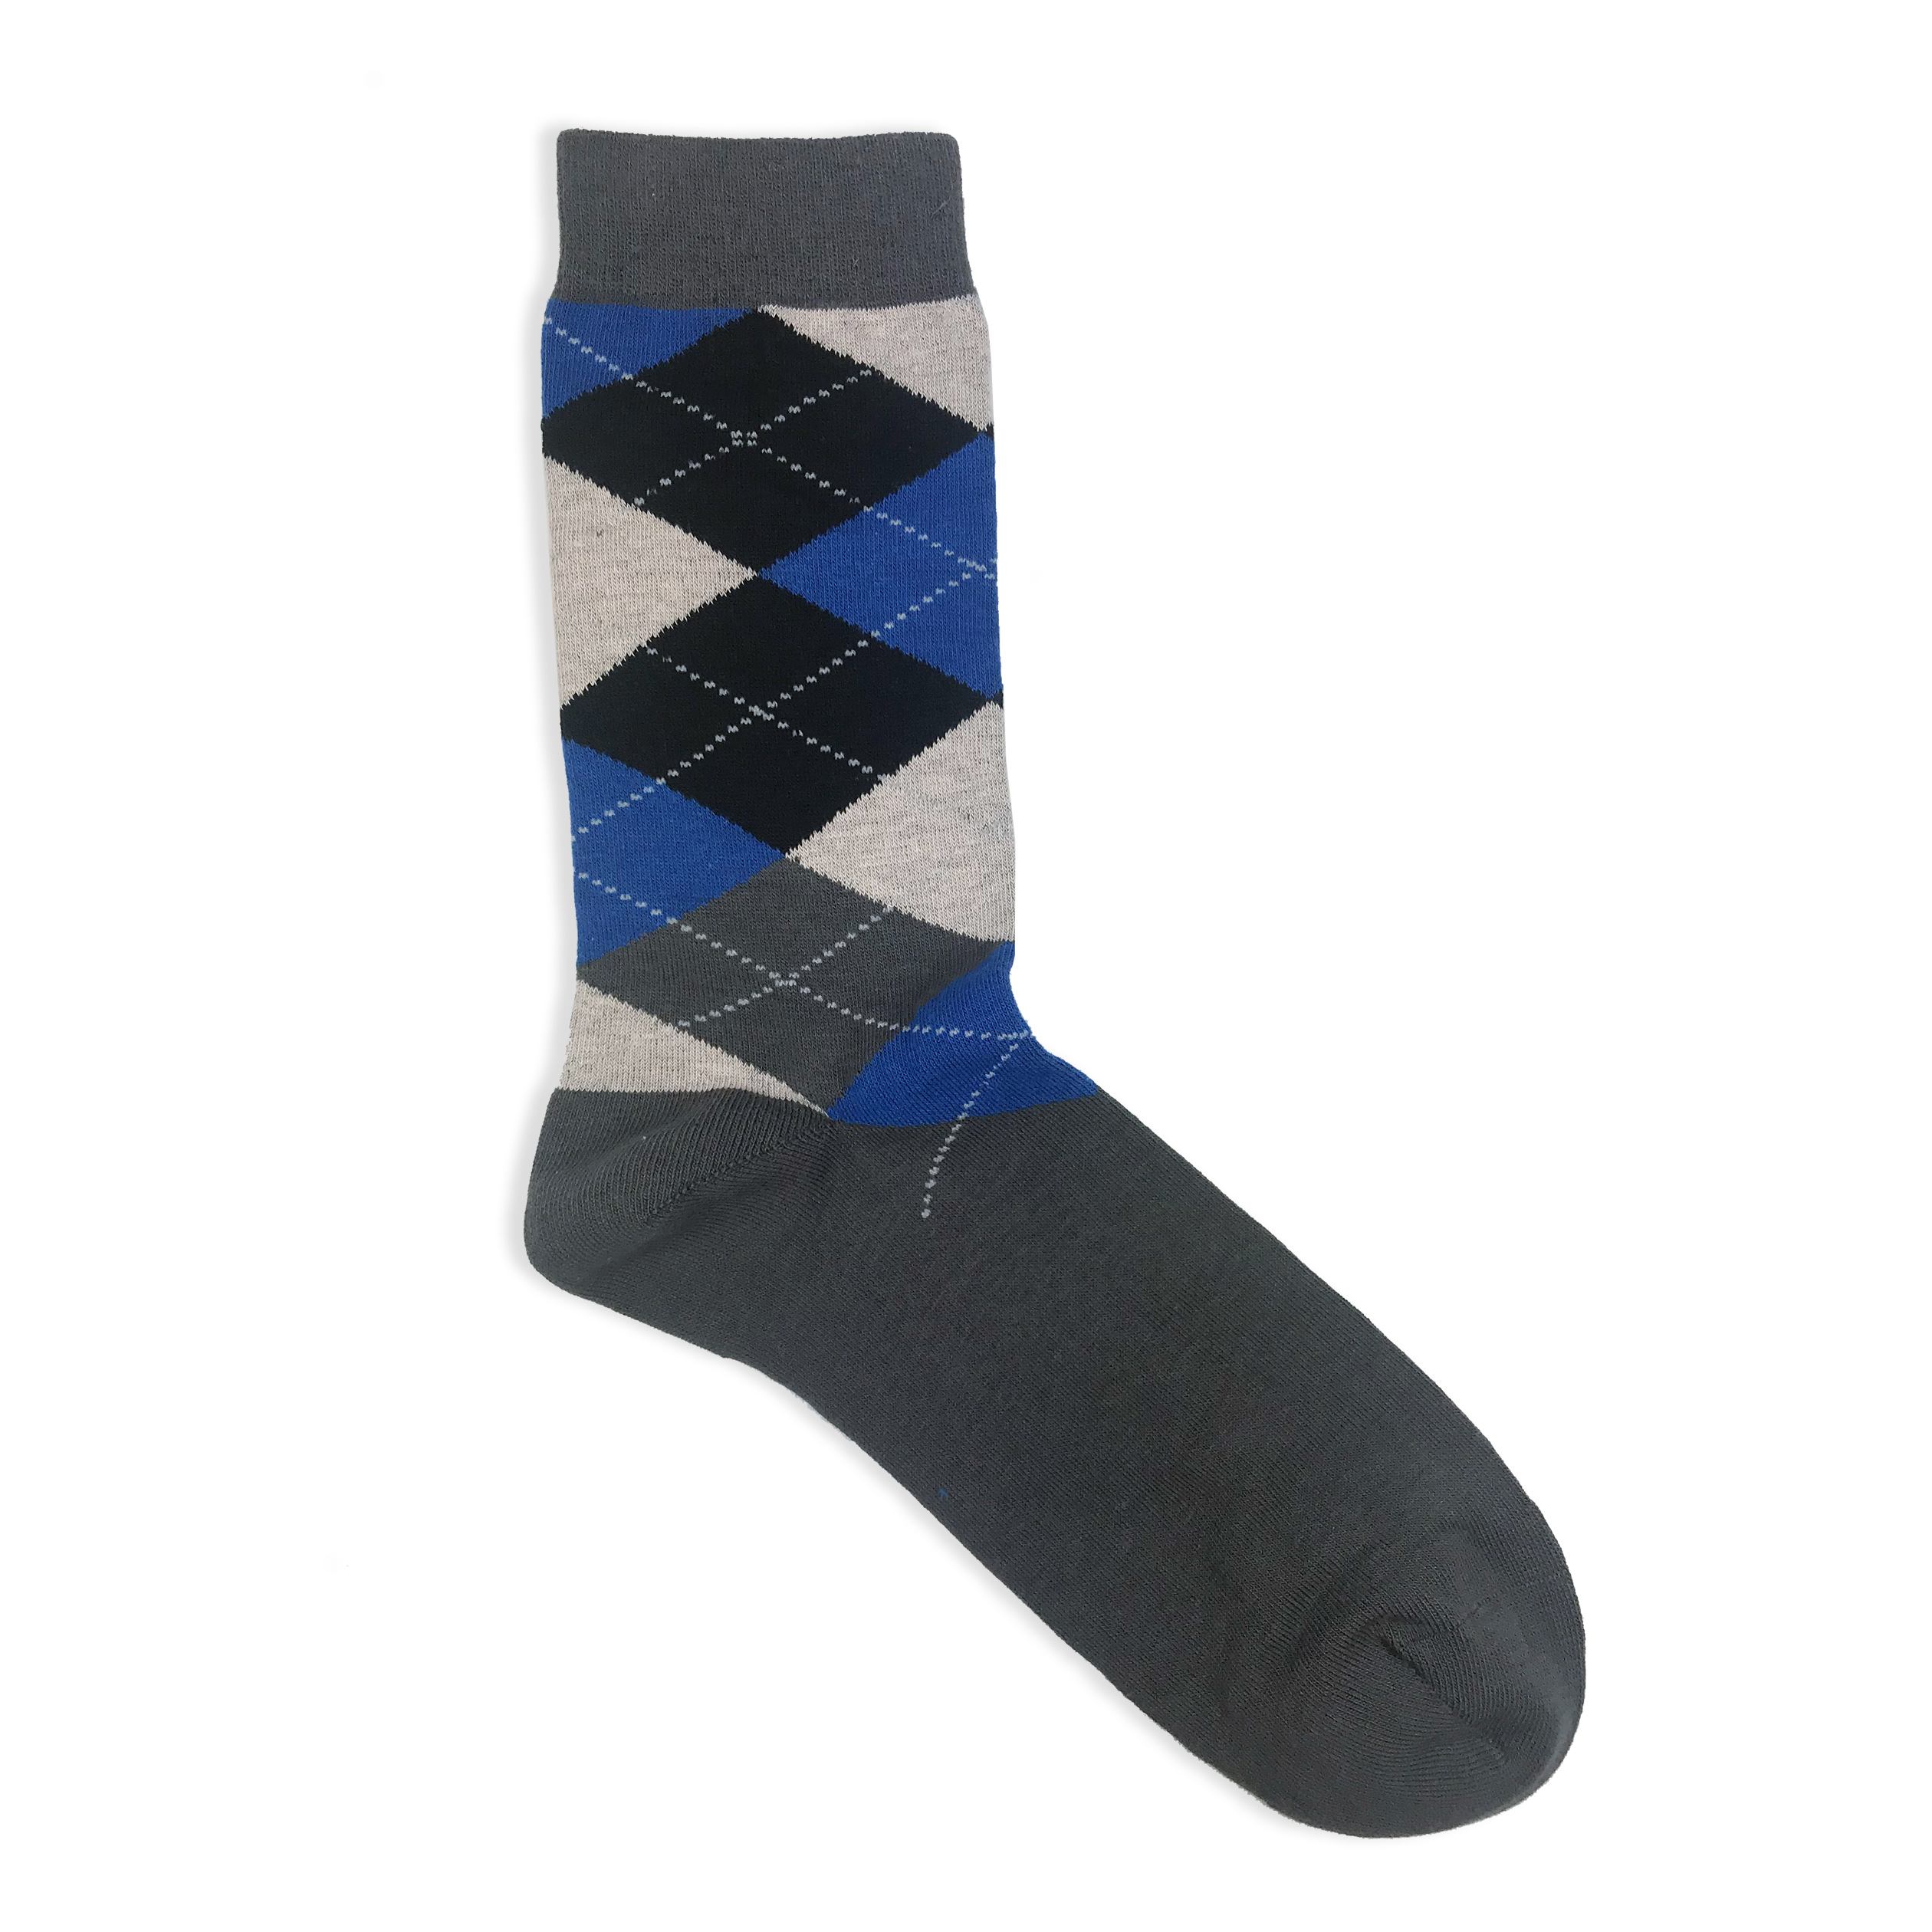 Blue Argyle | Yuppie Socks - Men's Dress Socks for young professionals